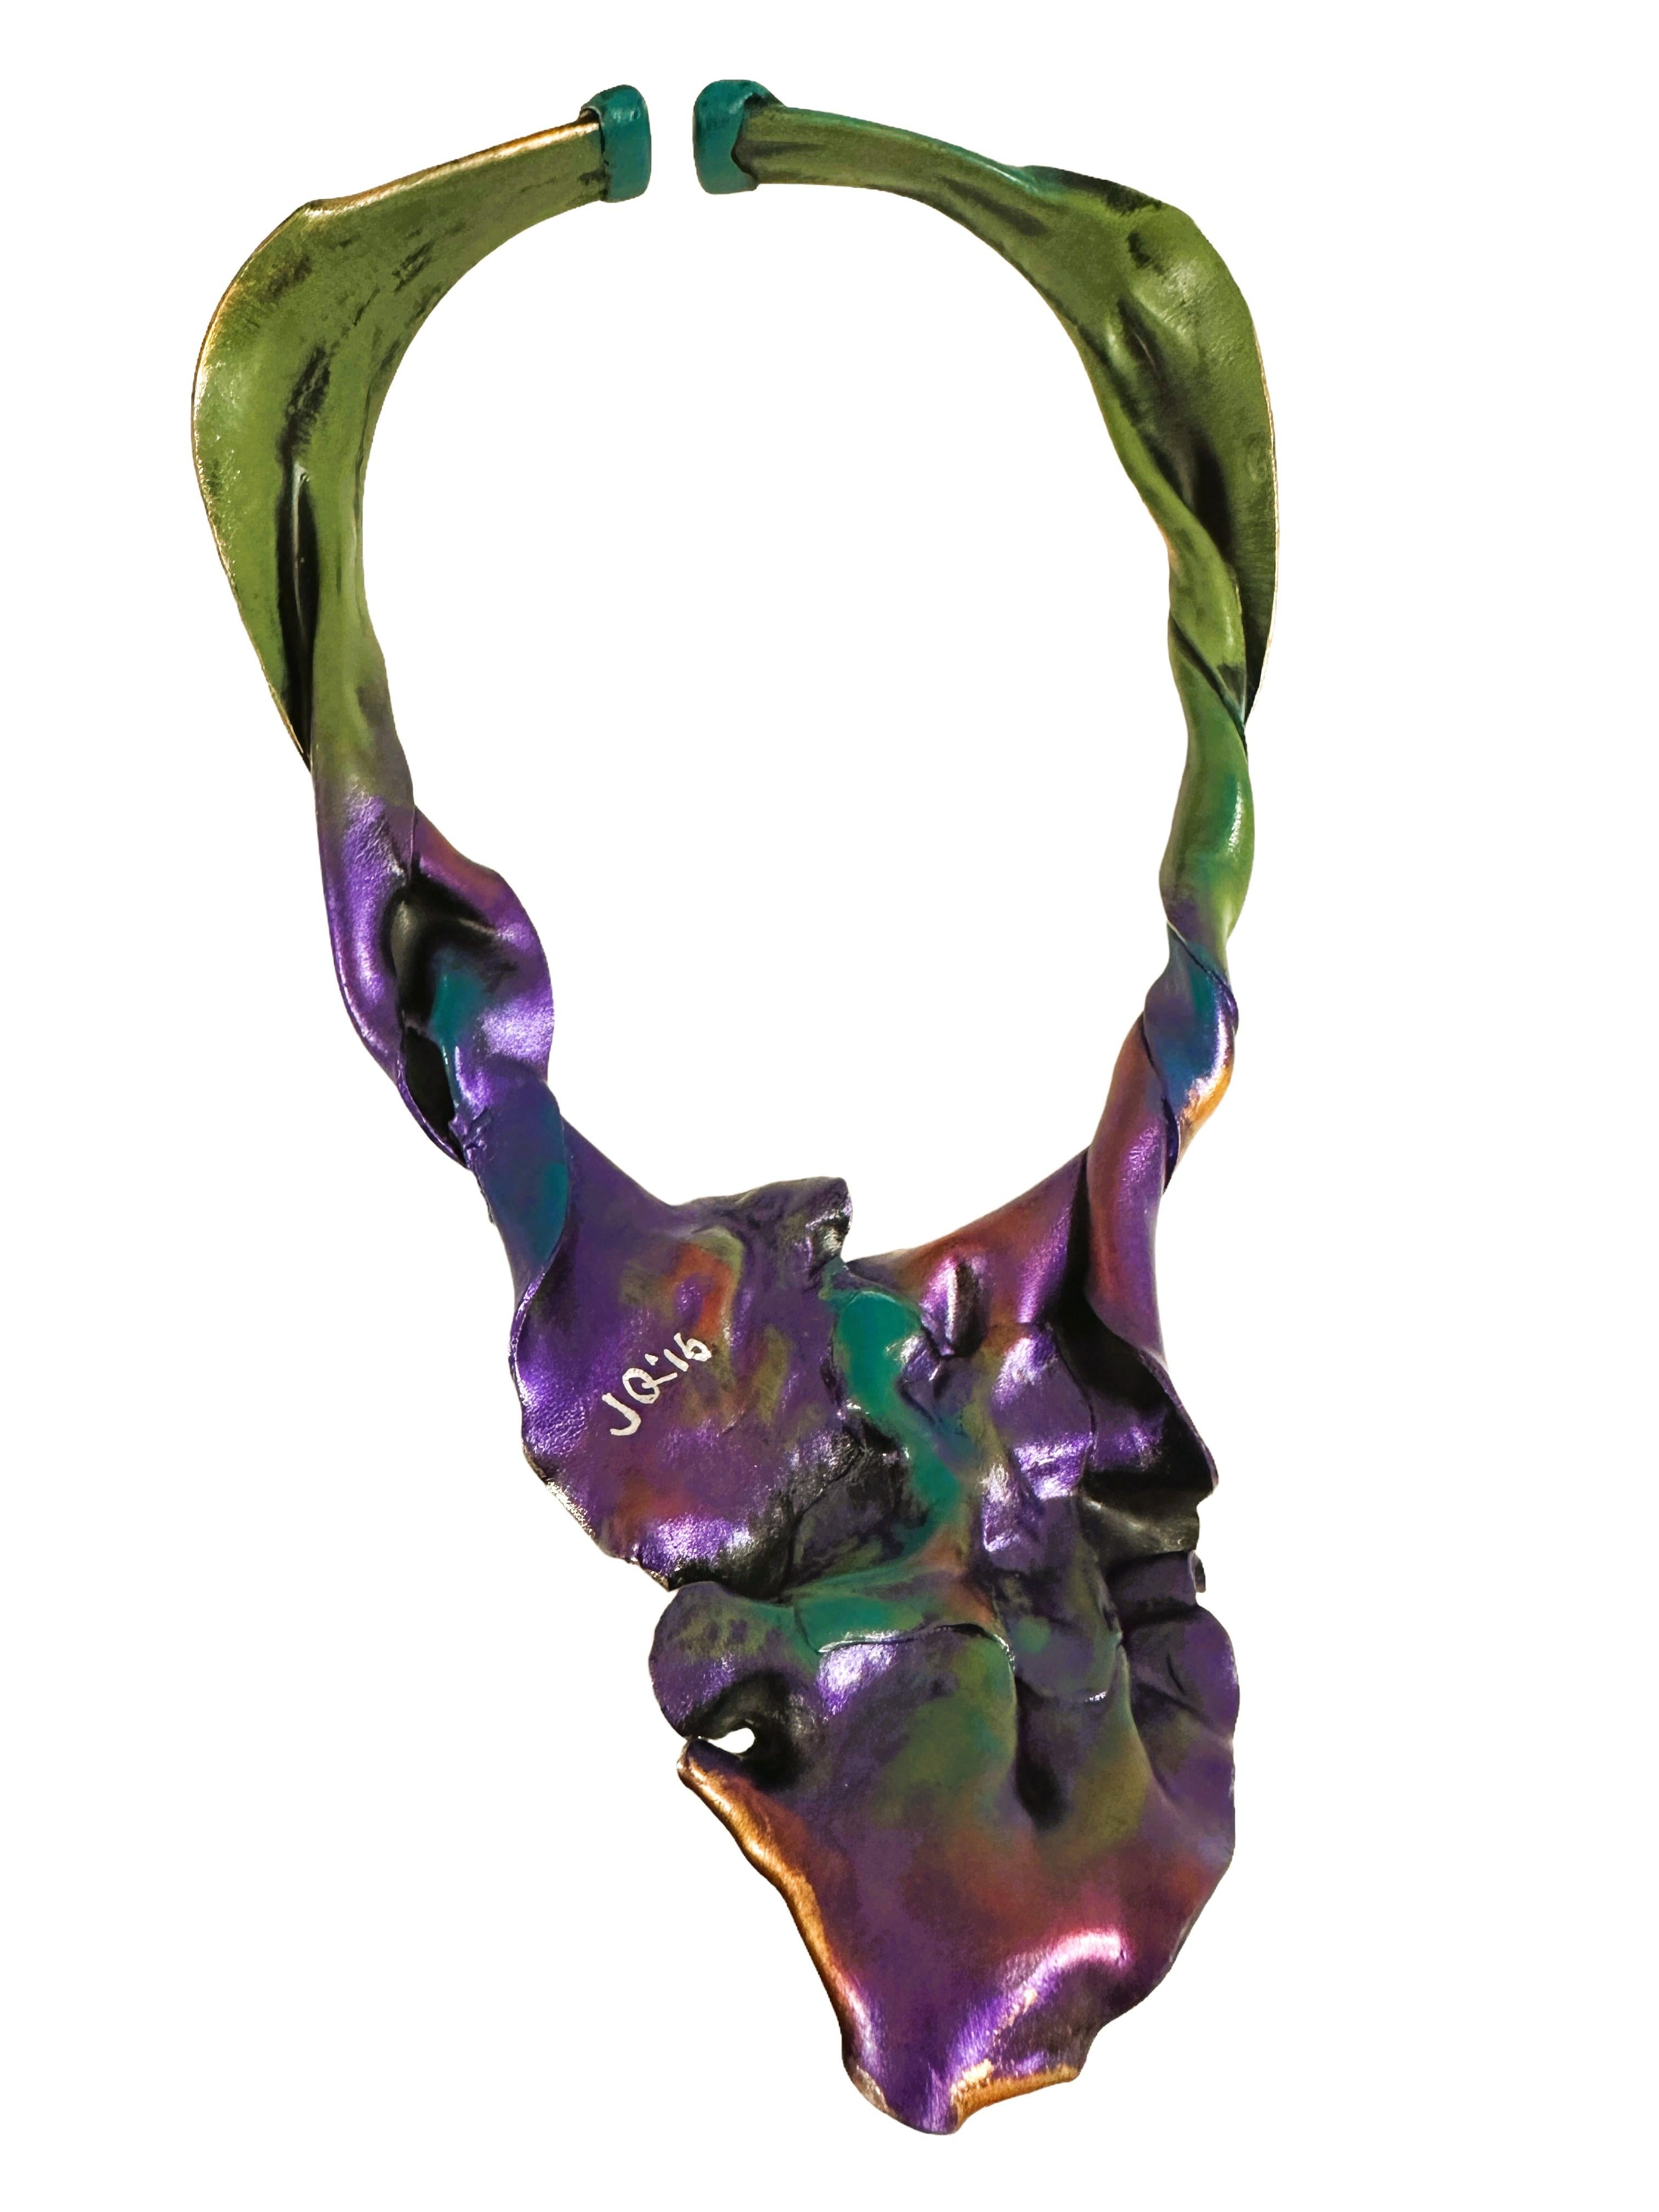 Jeanique Hand Sculpted, Hand Painted Wearable Art - Necklace & Bracelet For Sale 7